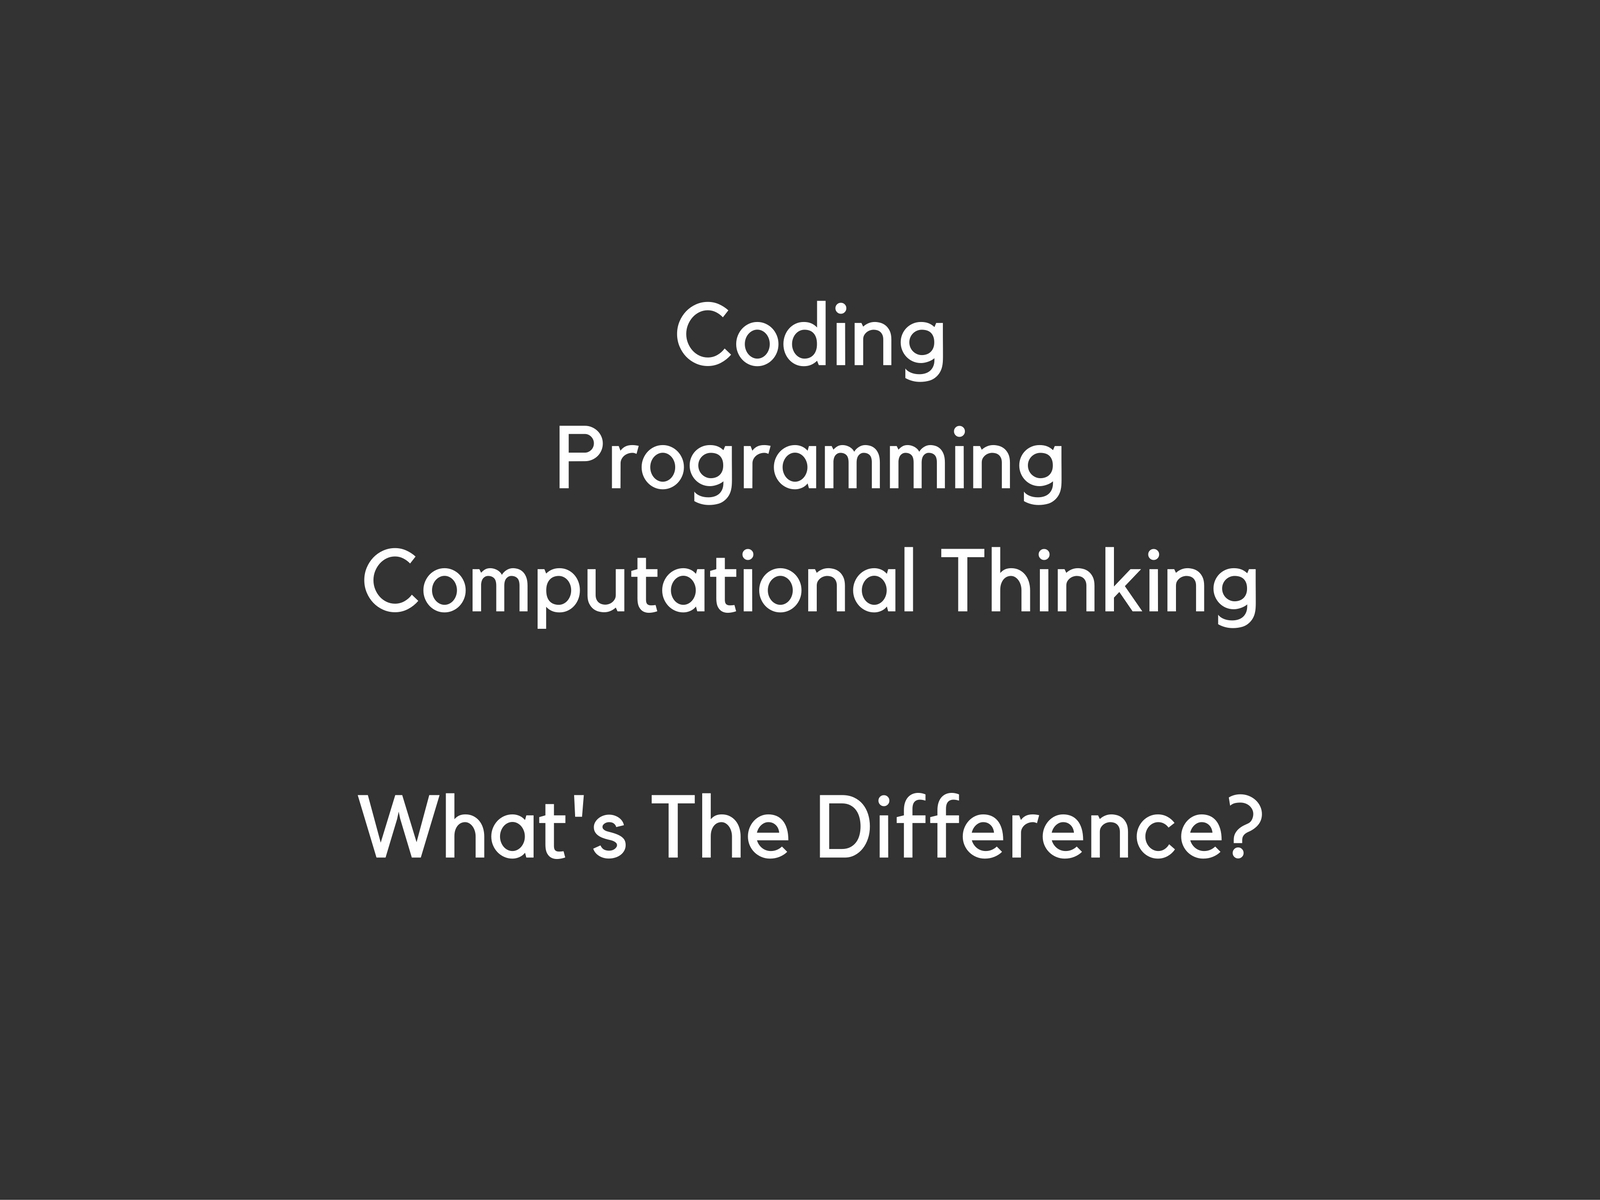 Coding Programming Computational Thinking